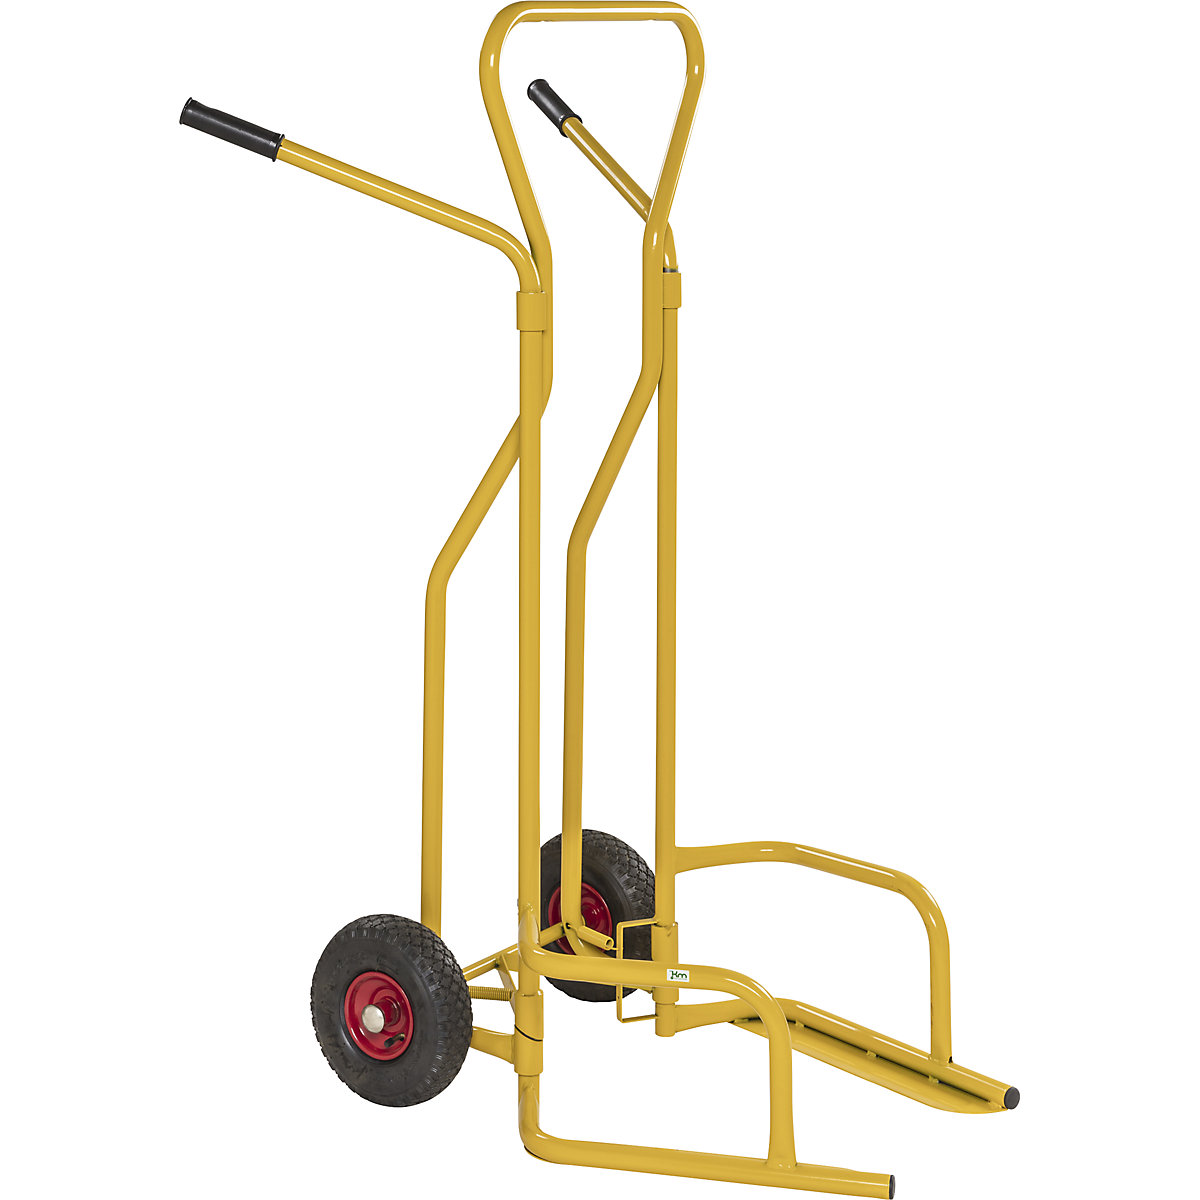 Carrello per pneumatici – Kongamek, portata 200 kg, giallo, a partire da 5 pz.-9